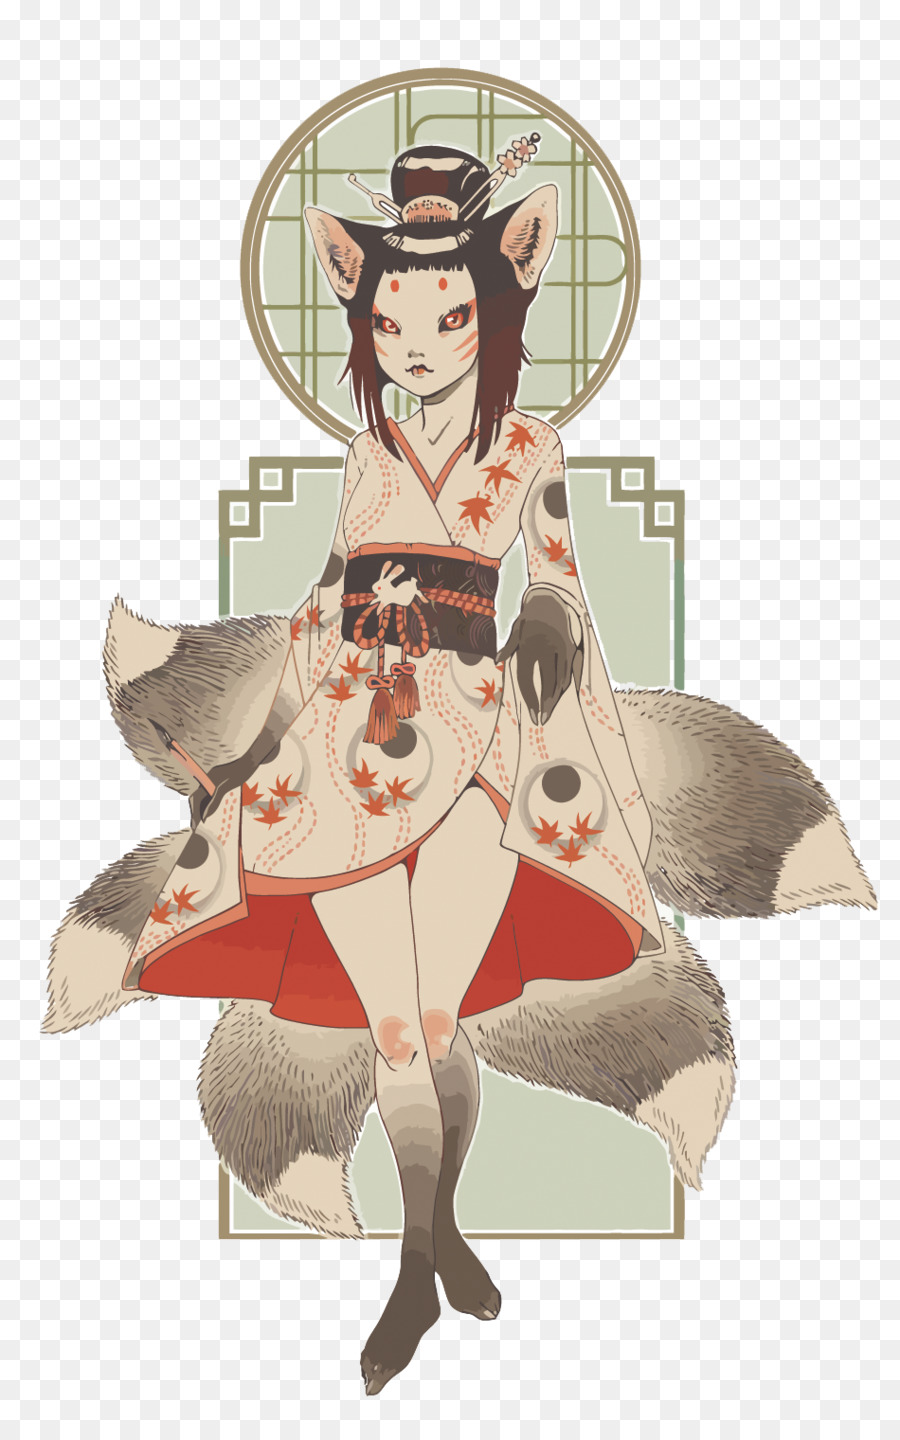 Kitsune Oni Yu014dkai Hyakki Yagyu014d Illustrazione - vettore giapponese jubileu fox